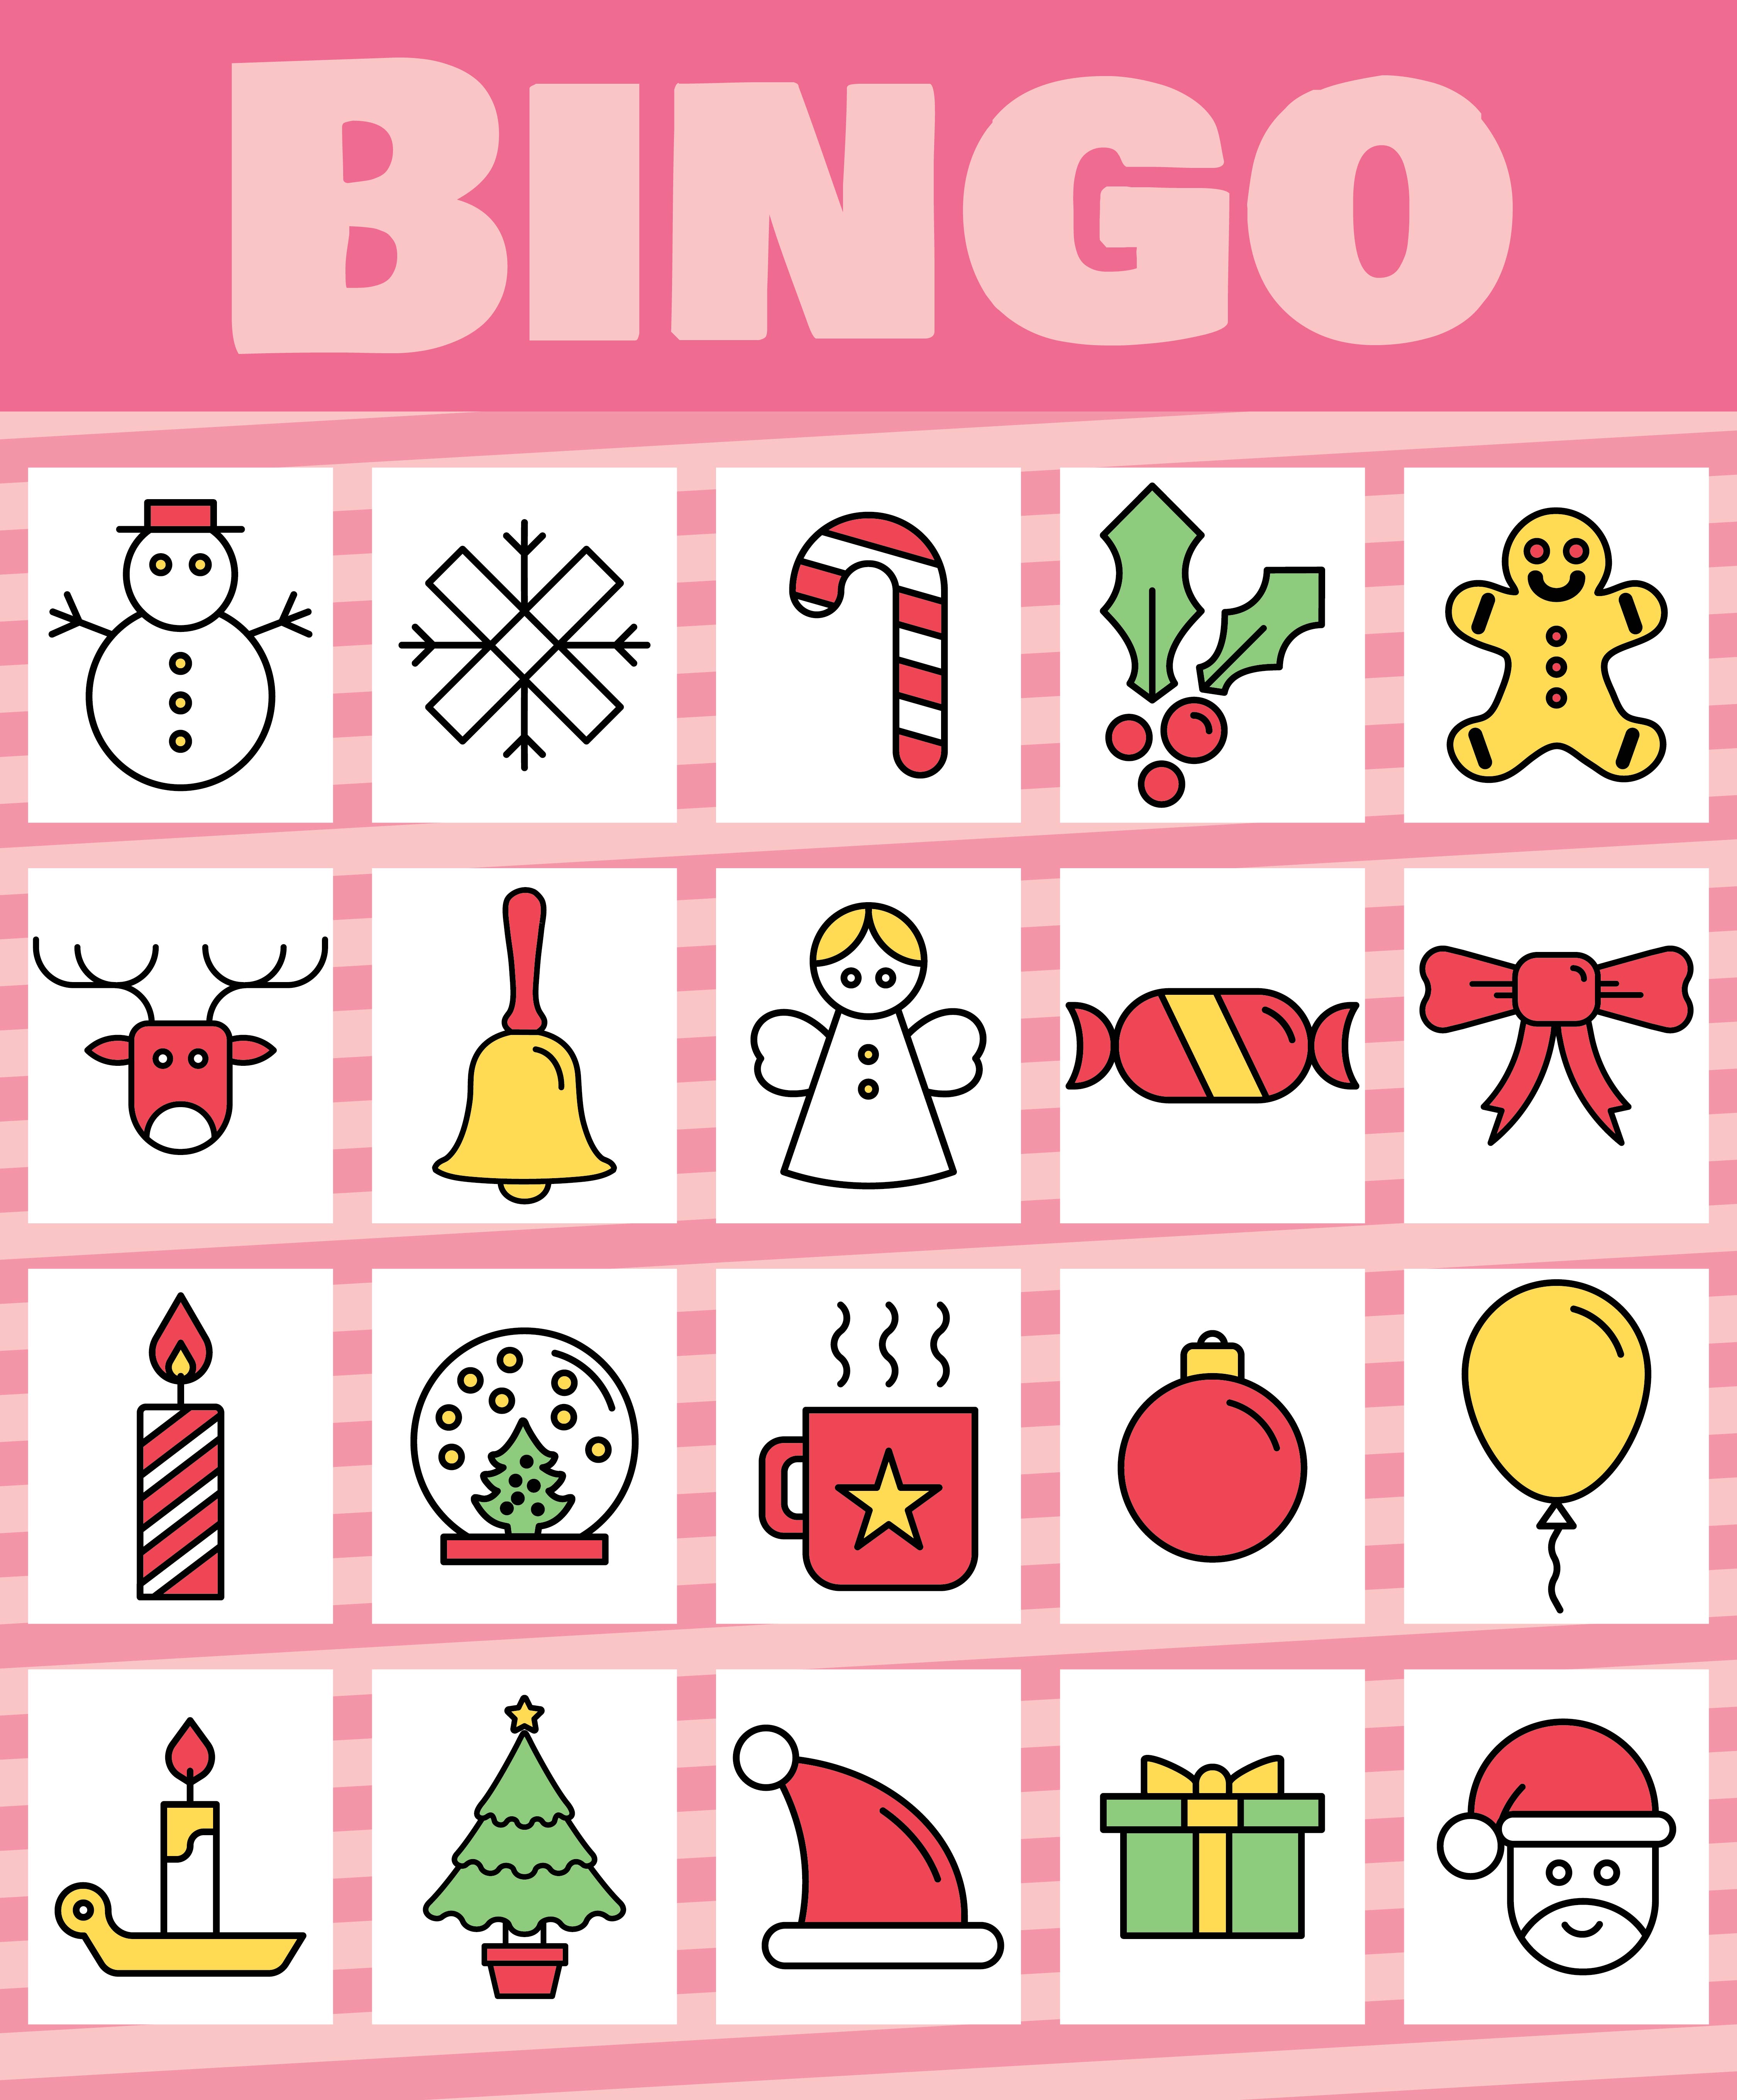 These Christmas Bingo Cards